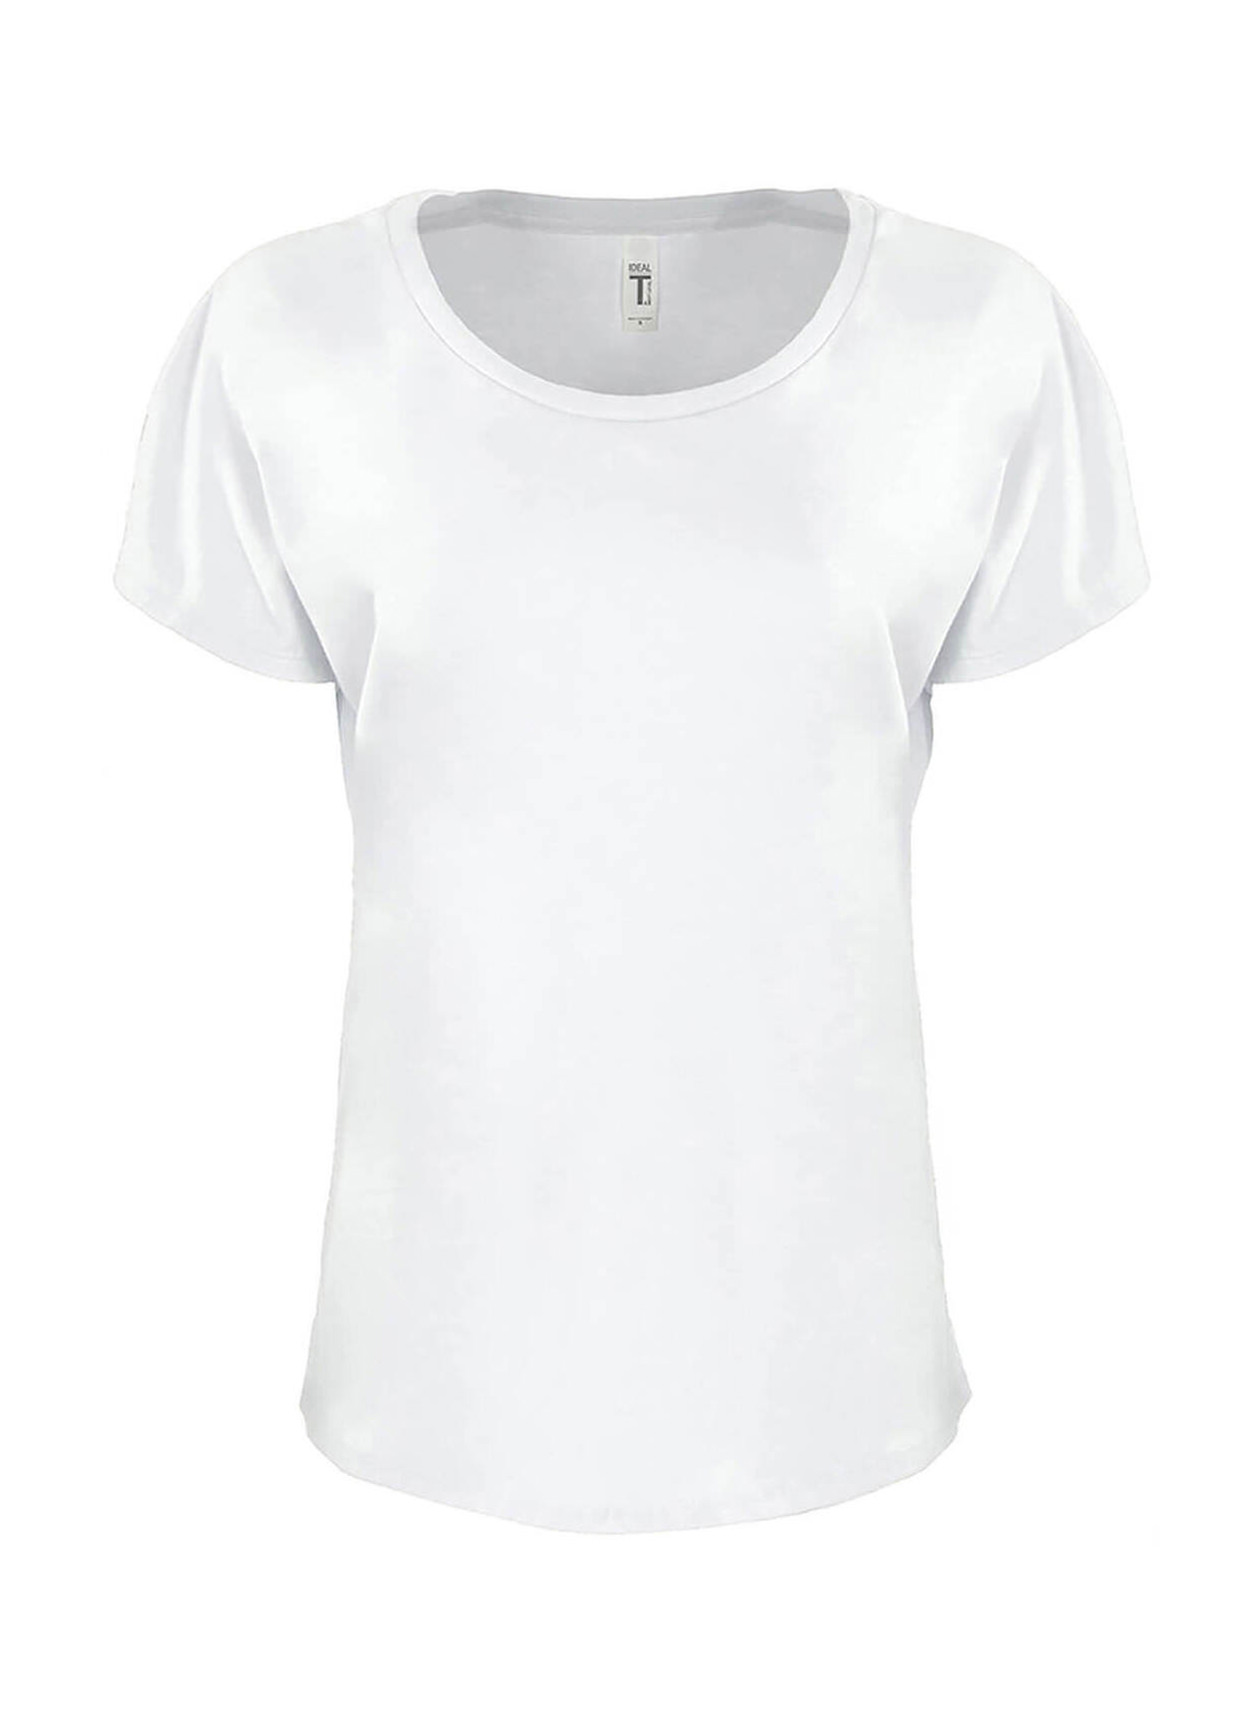 Next Level Women's White Ideal Dolman T-Shirt